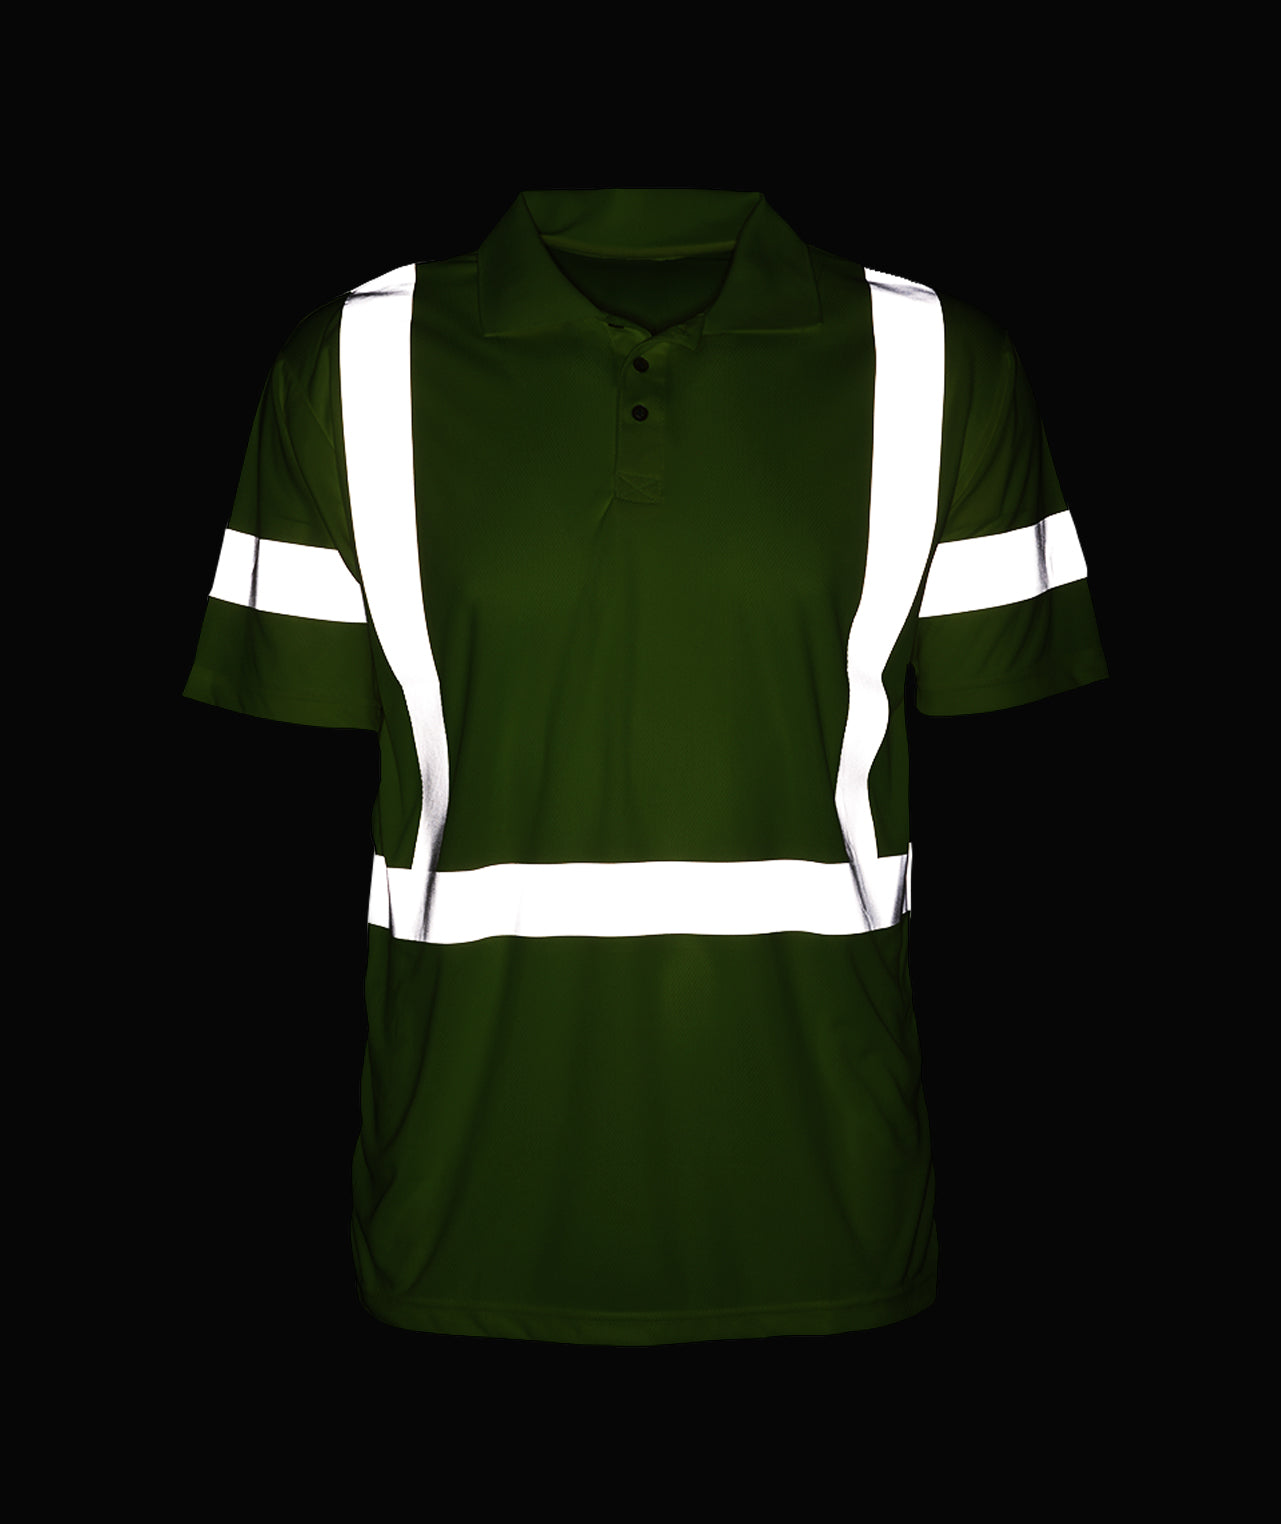 304STLM Hi-Vis Lime Birdseye Polo Shirt